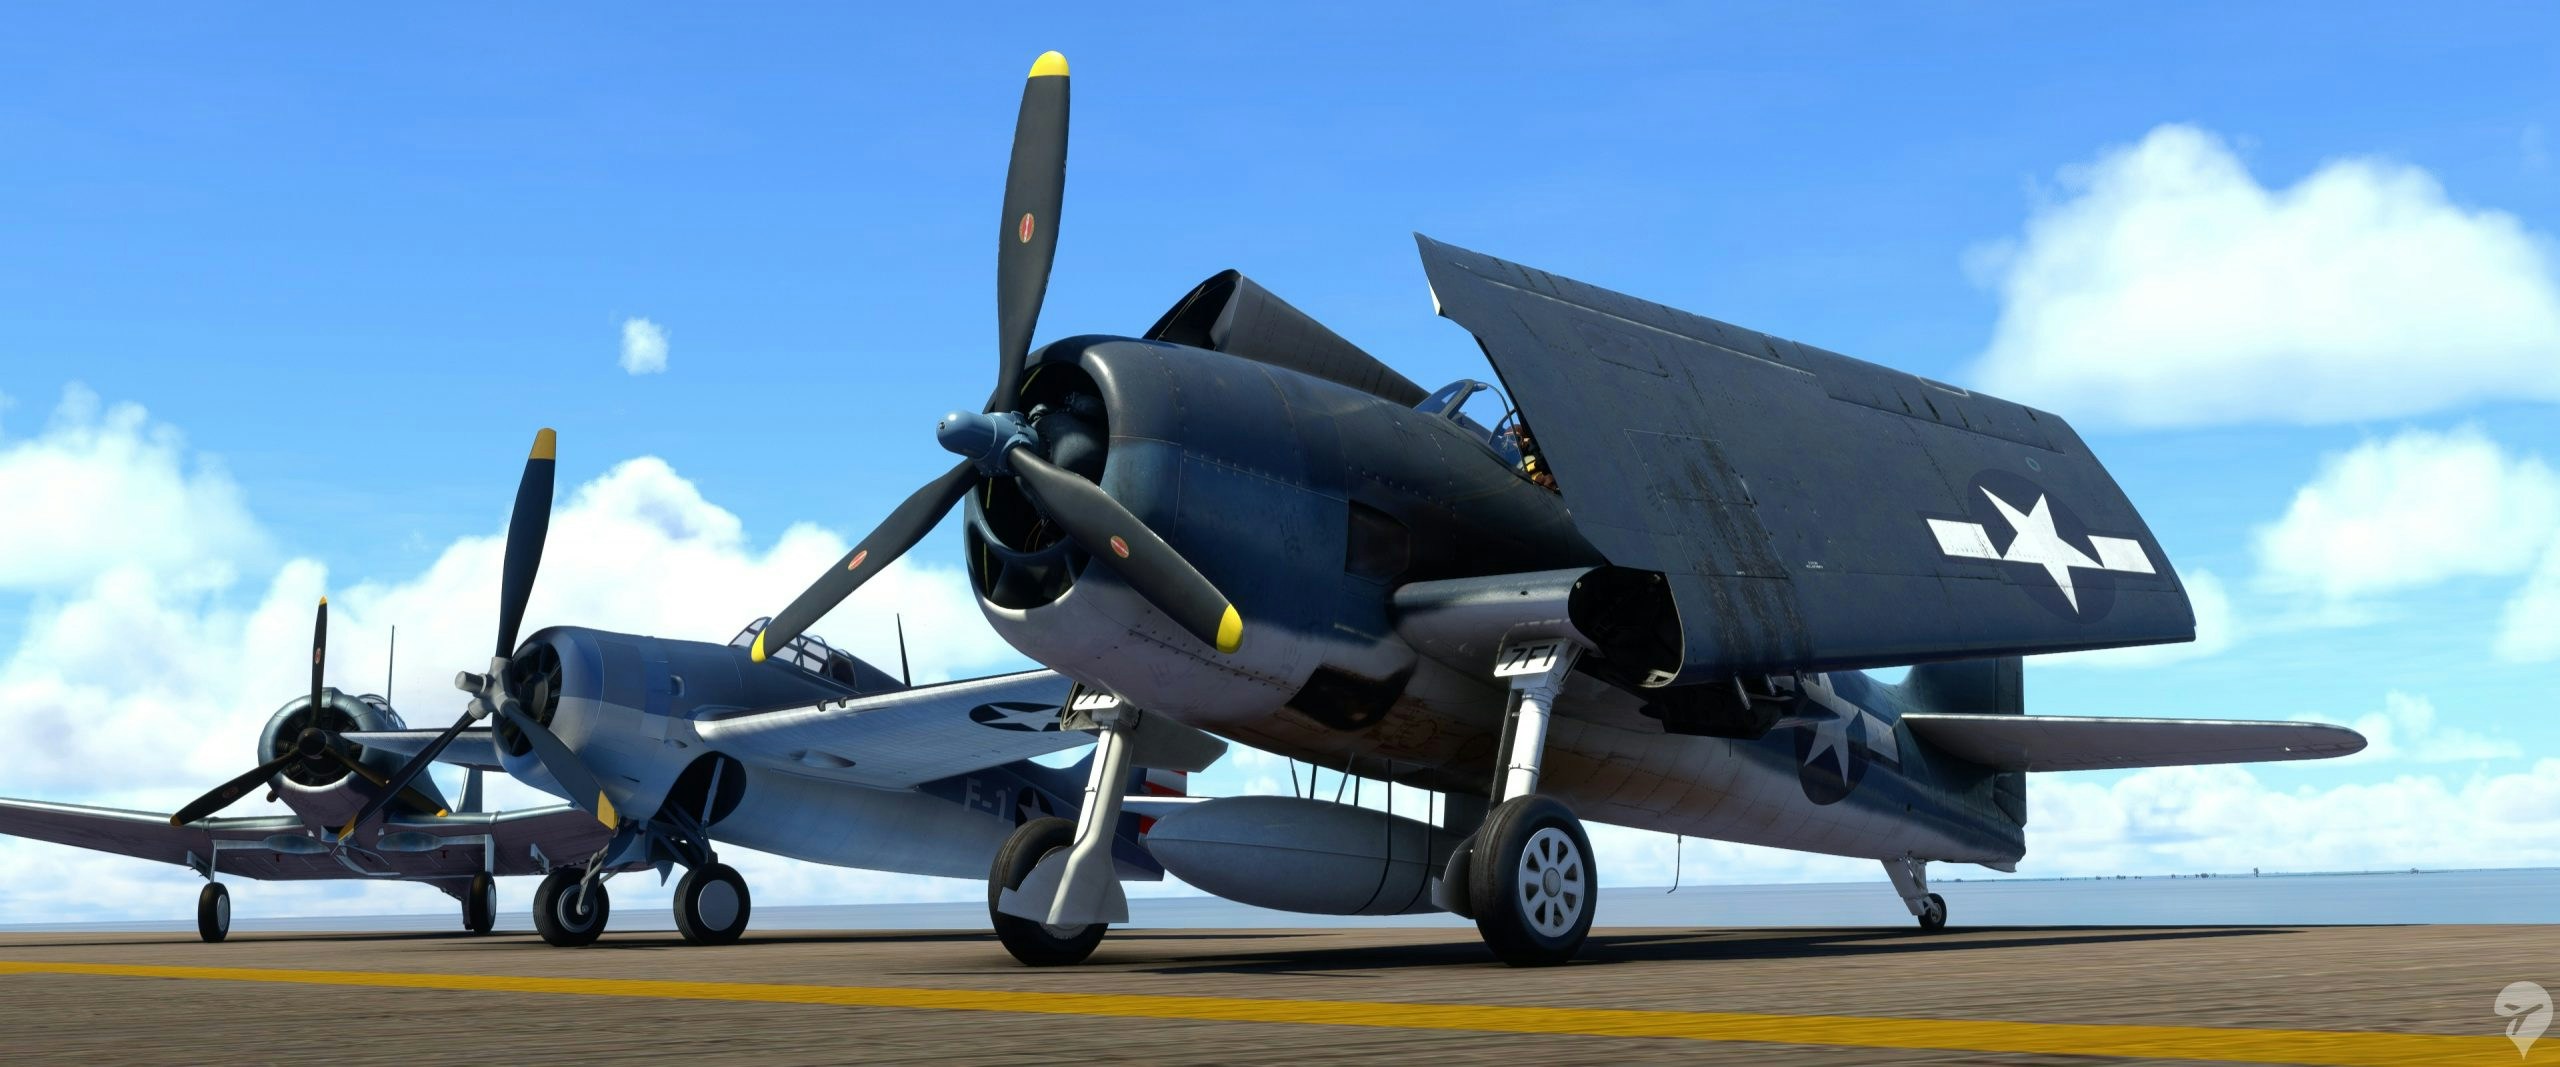 FlyingIron Simulations P-38 Update, F6F Hellcat on Marketplace